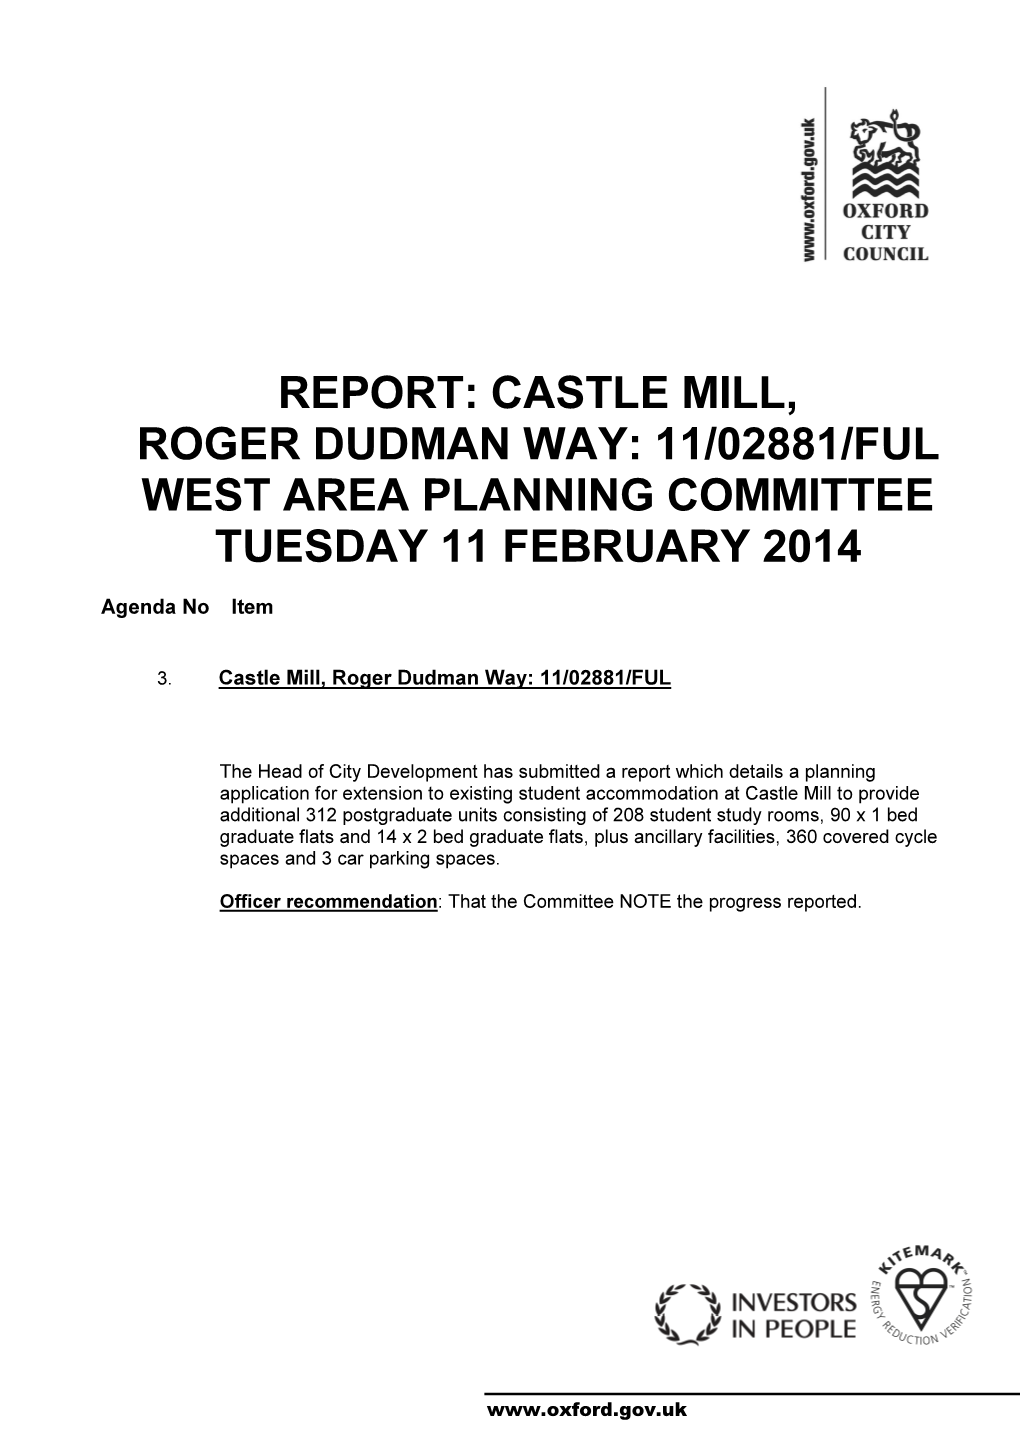 Castle Mill, Roger Dudman Way: 11/02881/Ful West Area Planning Committee